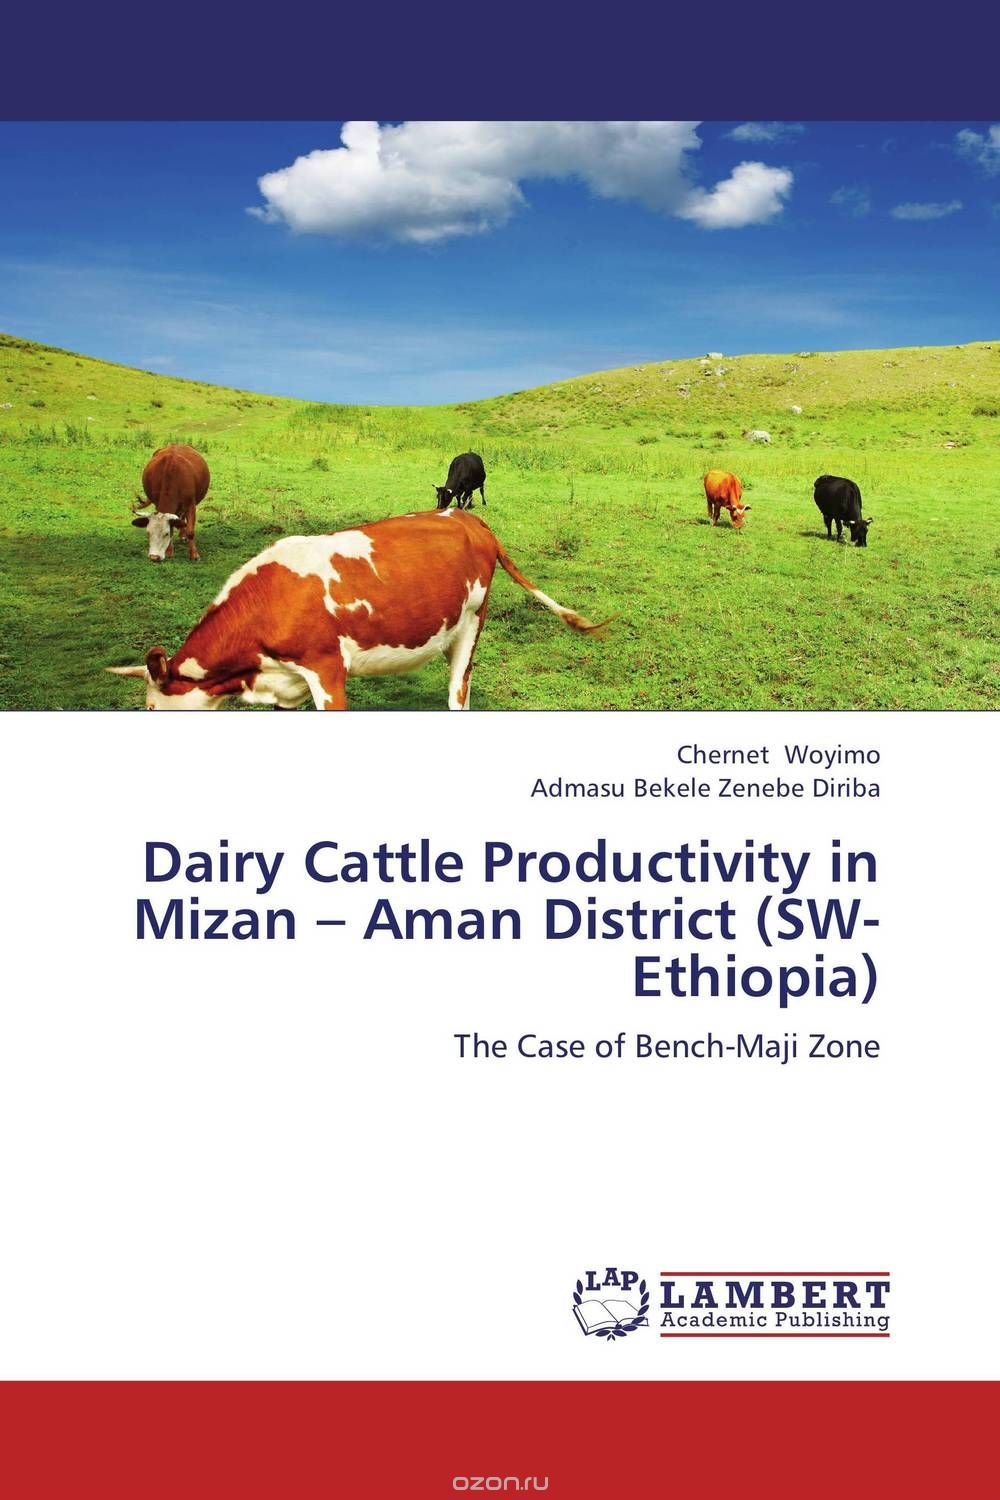 Dairy Cattle Productivity in Mizan – Aman District (SW-Ethiopia)